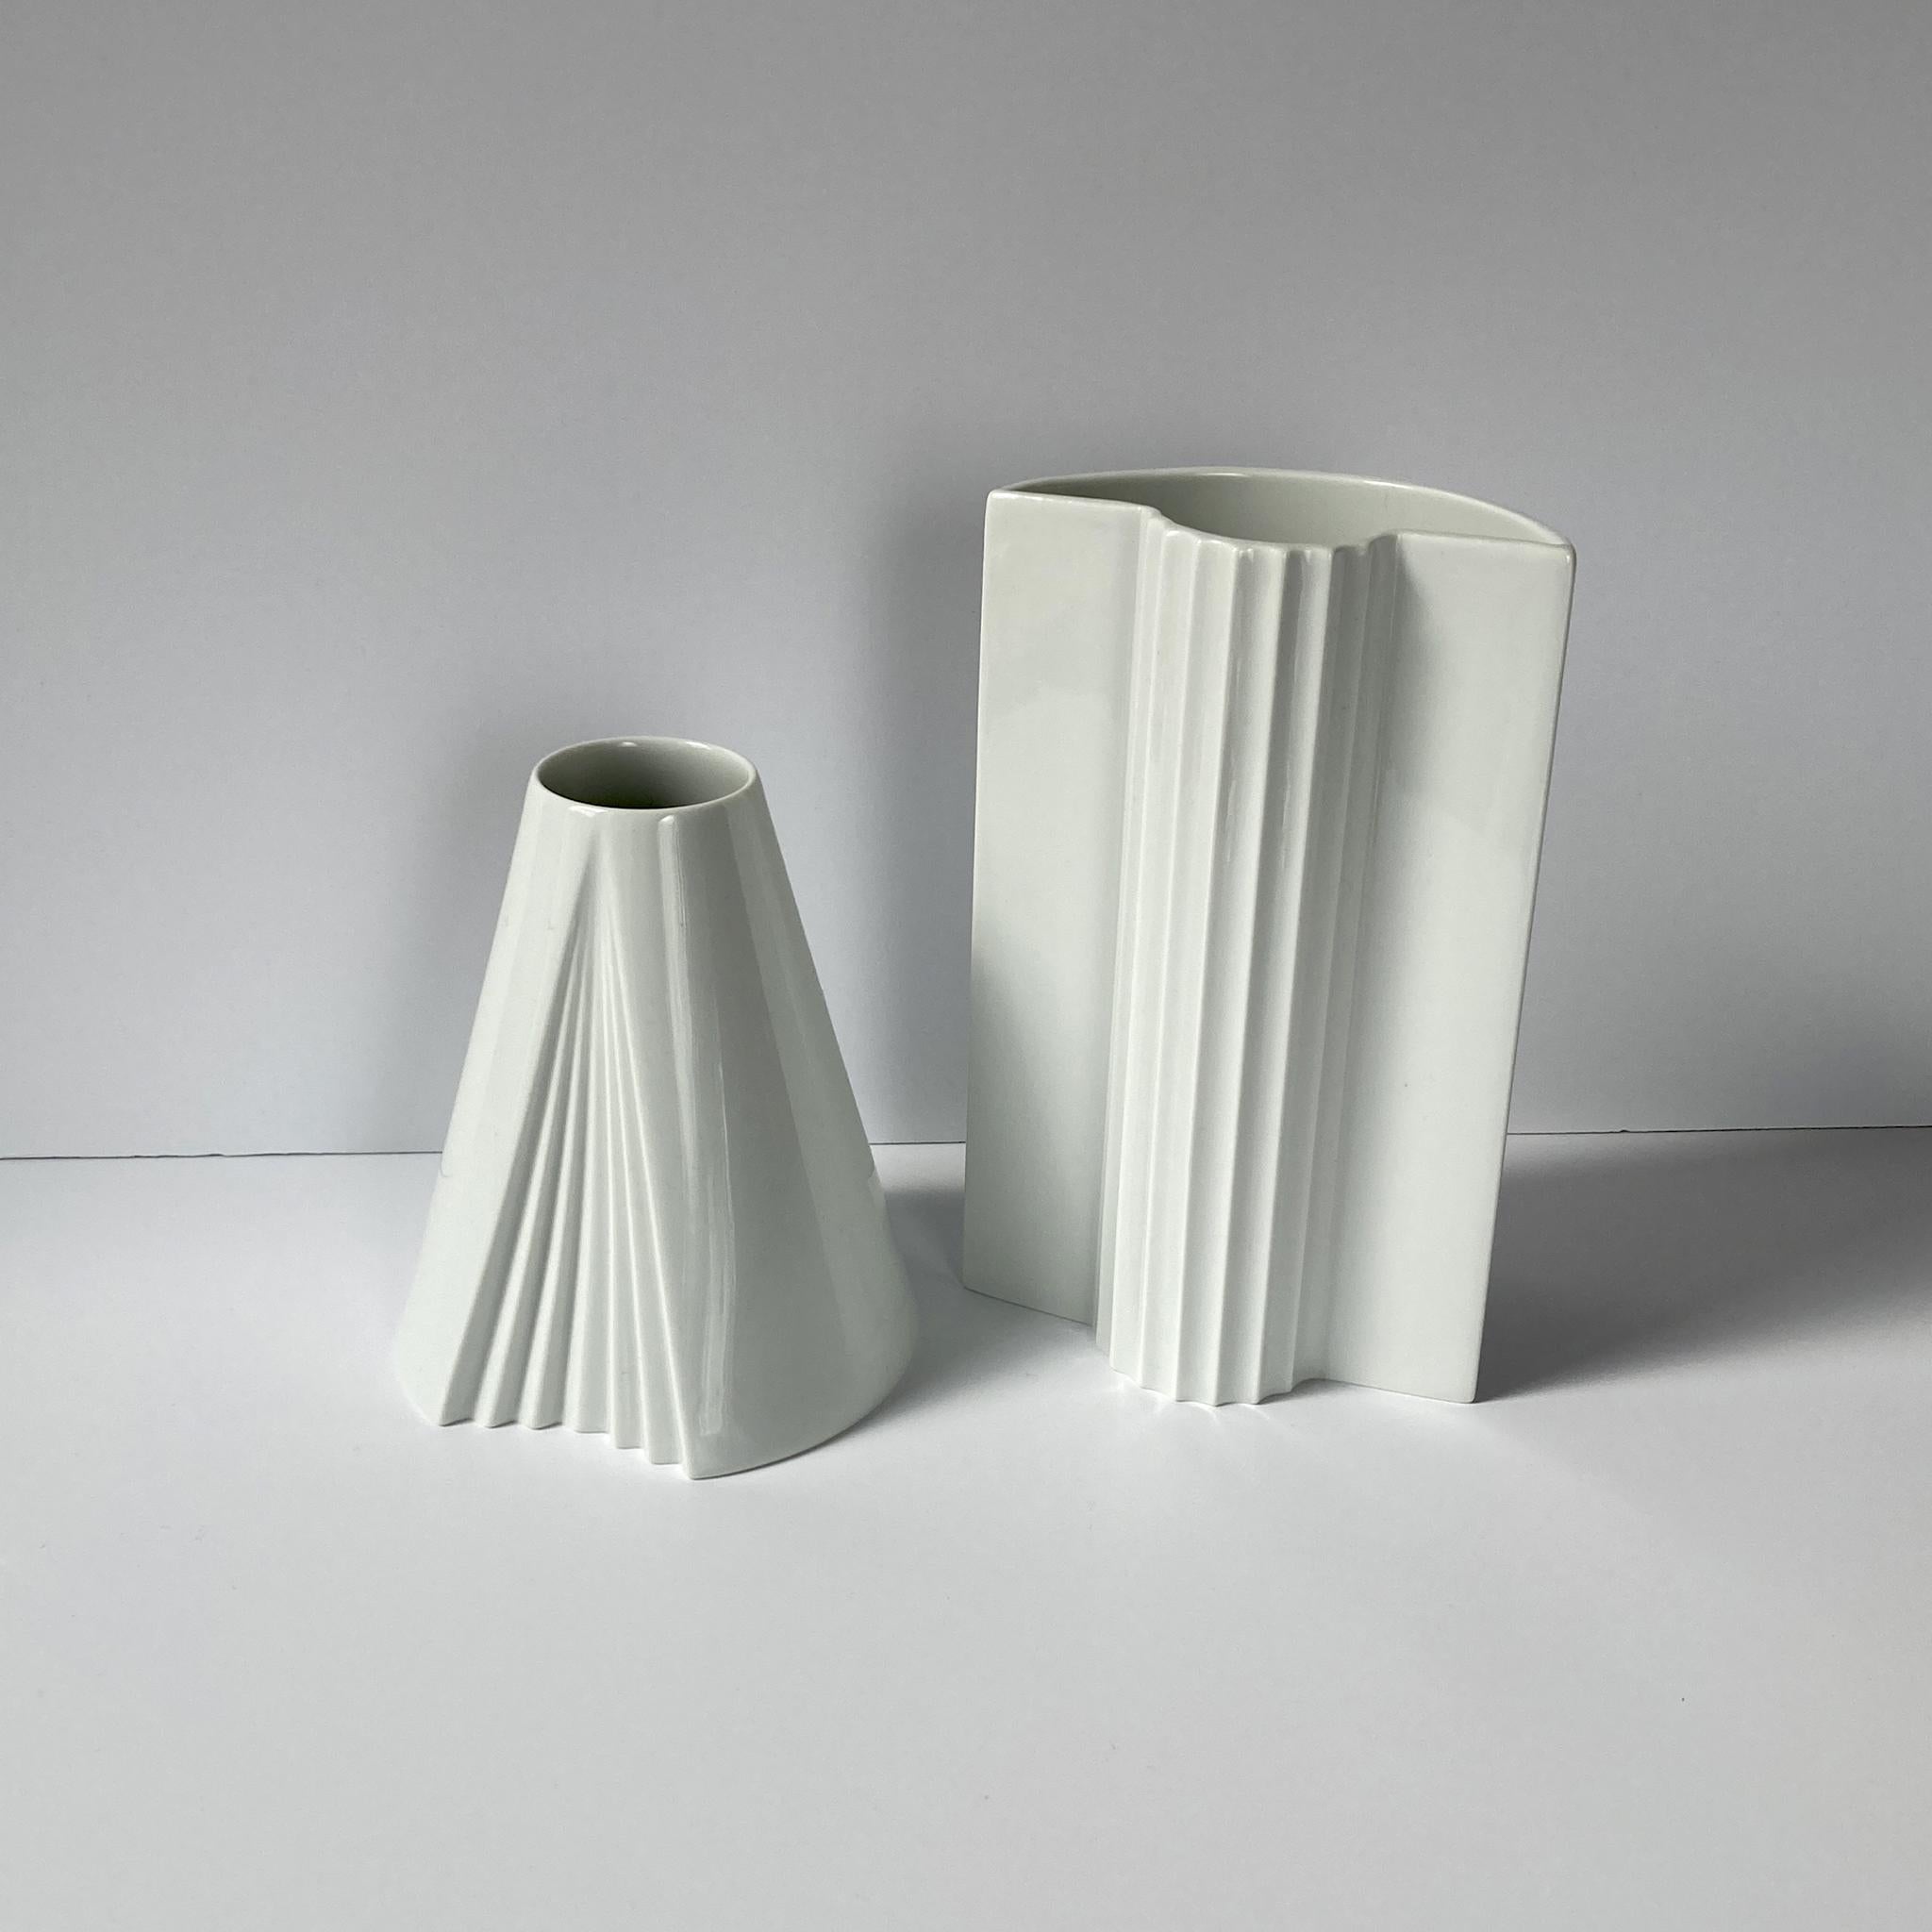 German Rosenthal and Thomas Keramik White Porcelain Vases, Pair of Two For Sale